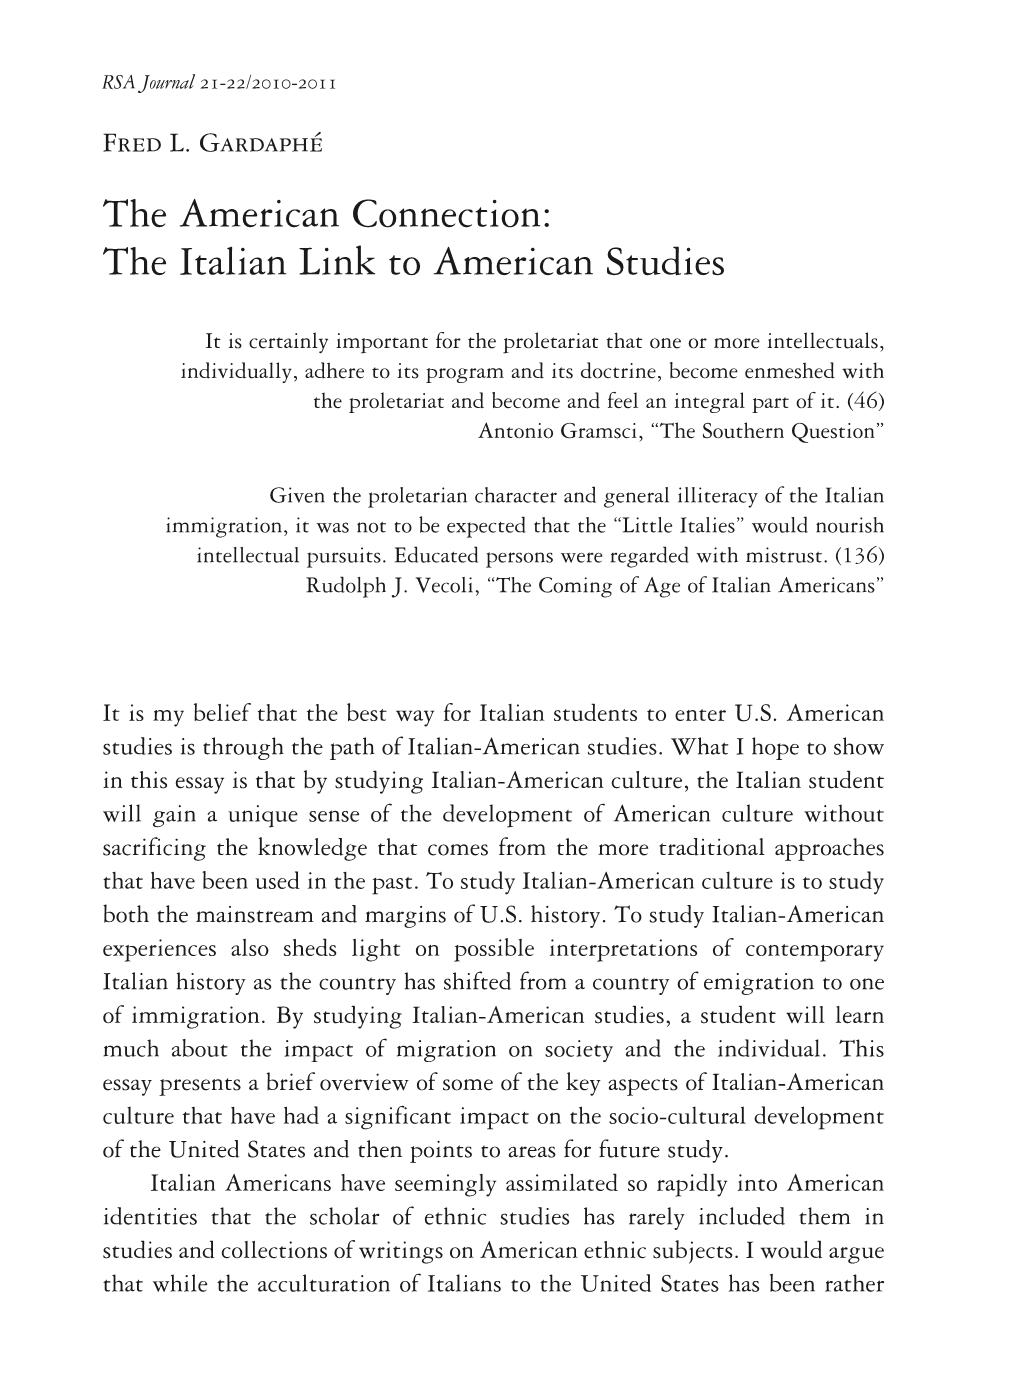 The Italian Link to American Studies